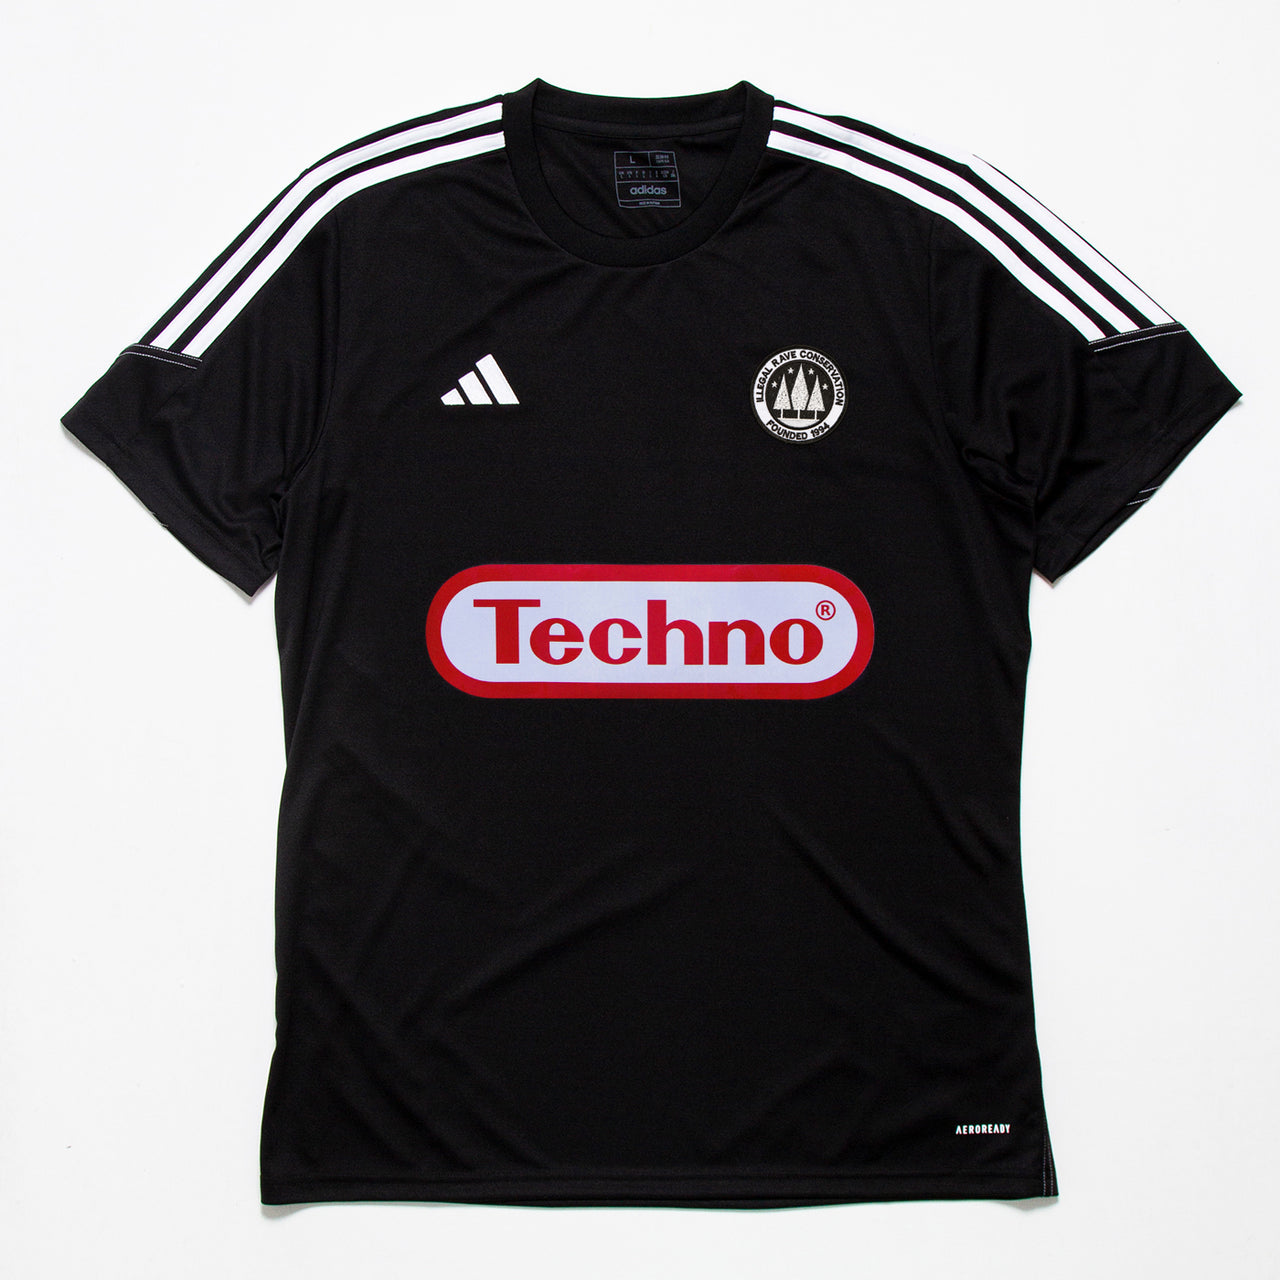 Super Techno FC Tiro 23 - Training Jersey - Black/White